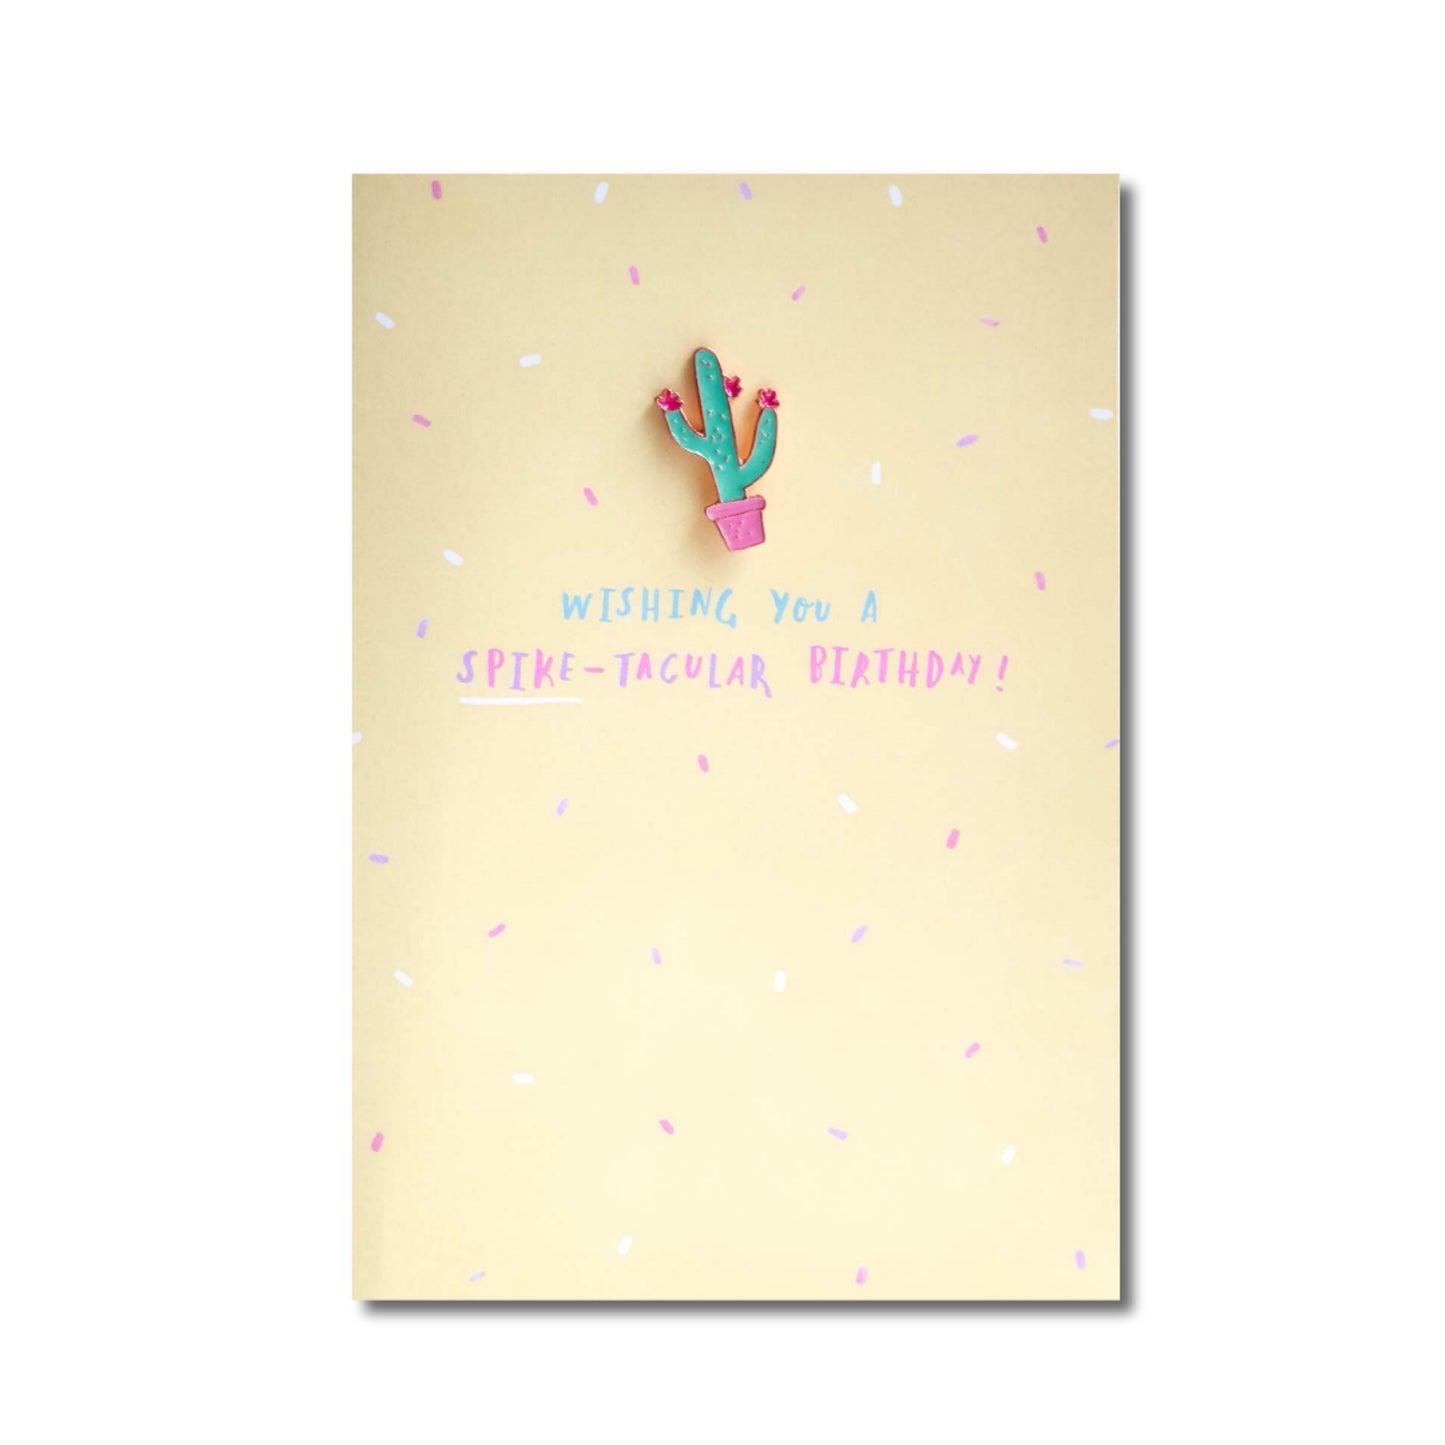 Wishing you a spike-tacular birthday ! - Enamel pin badge card